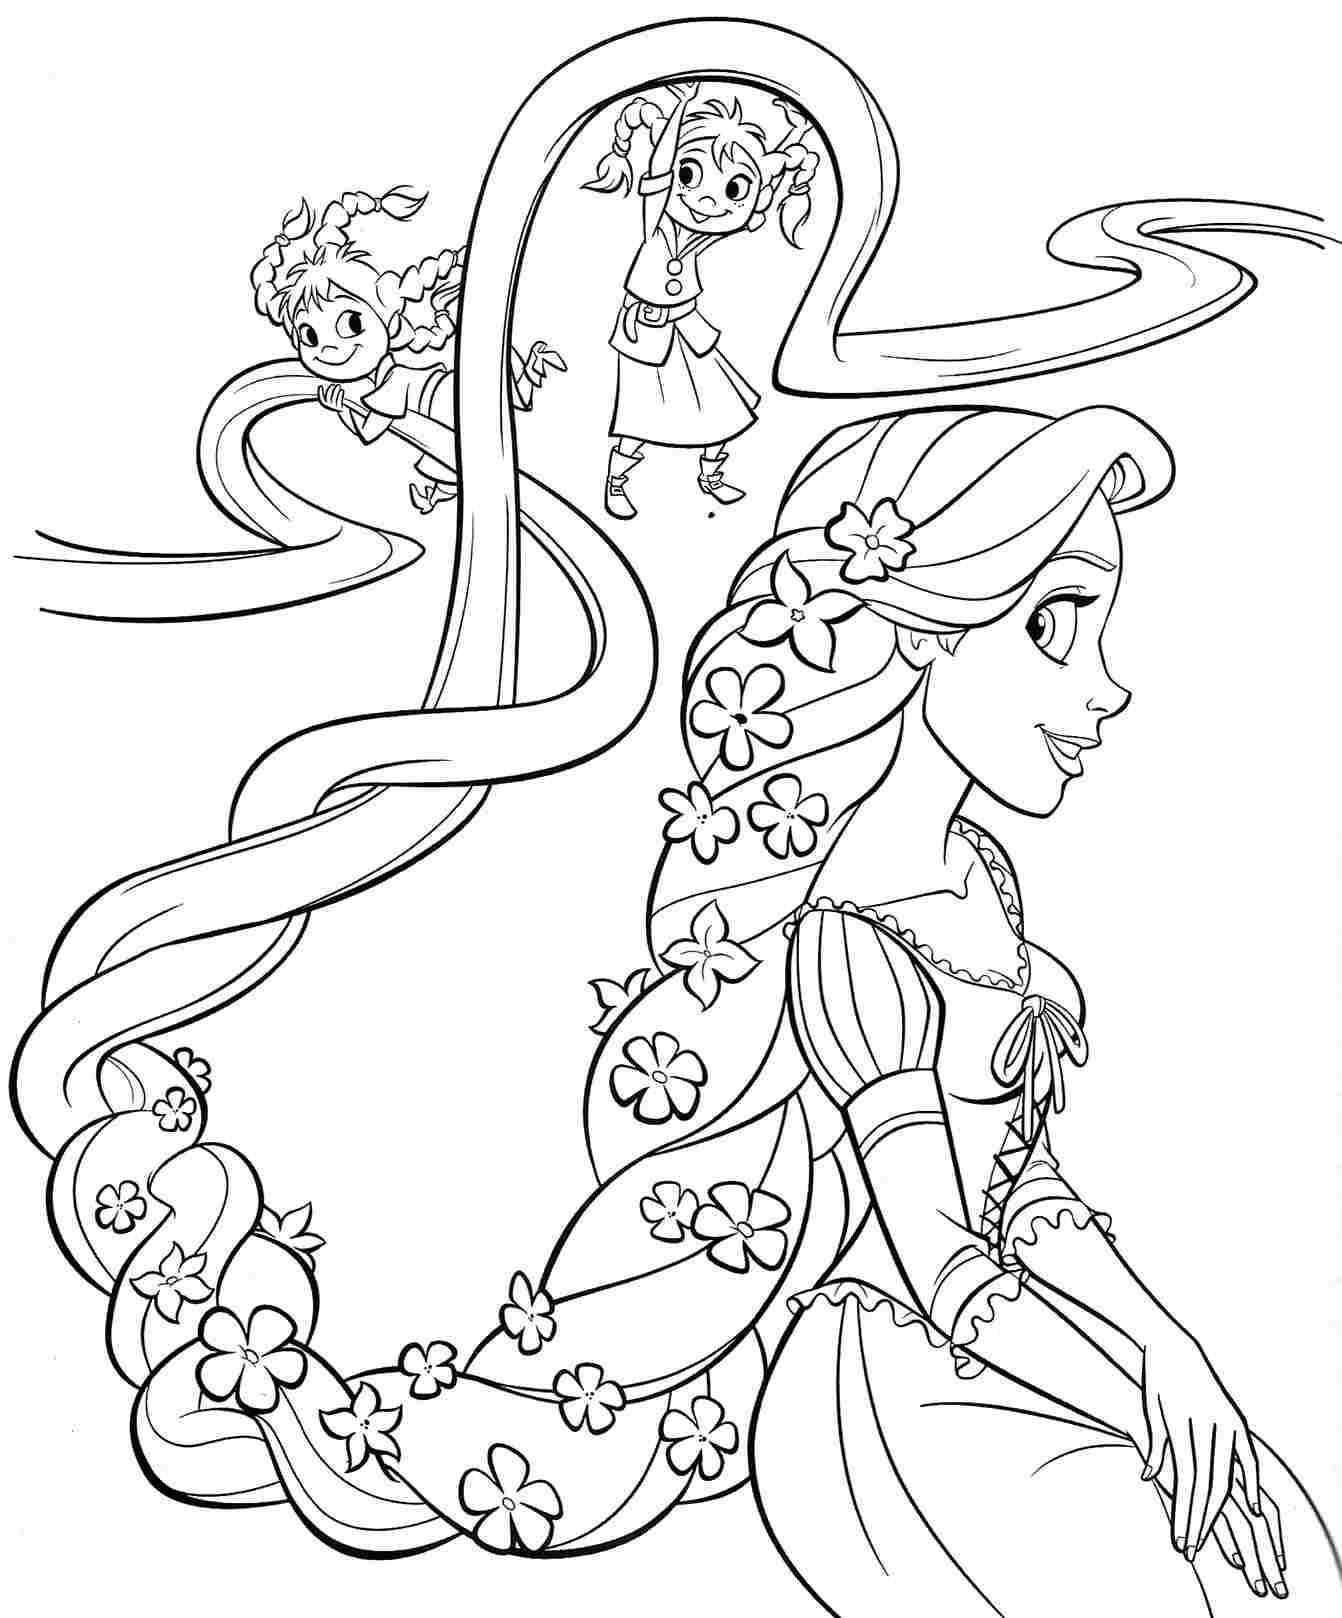 Coloring Page Of Disney Princess Wallpaper